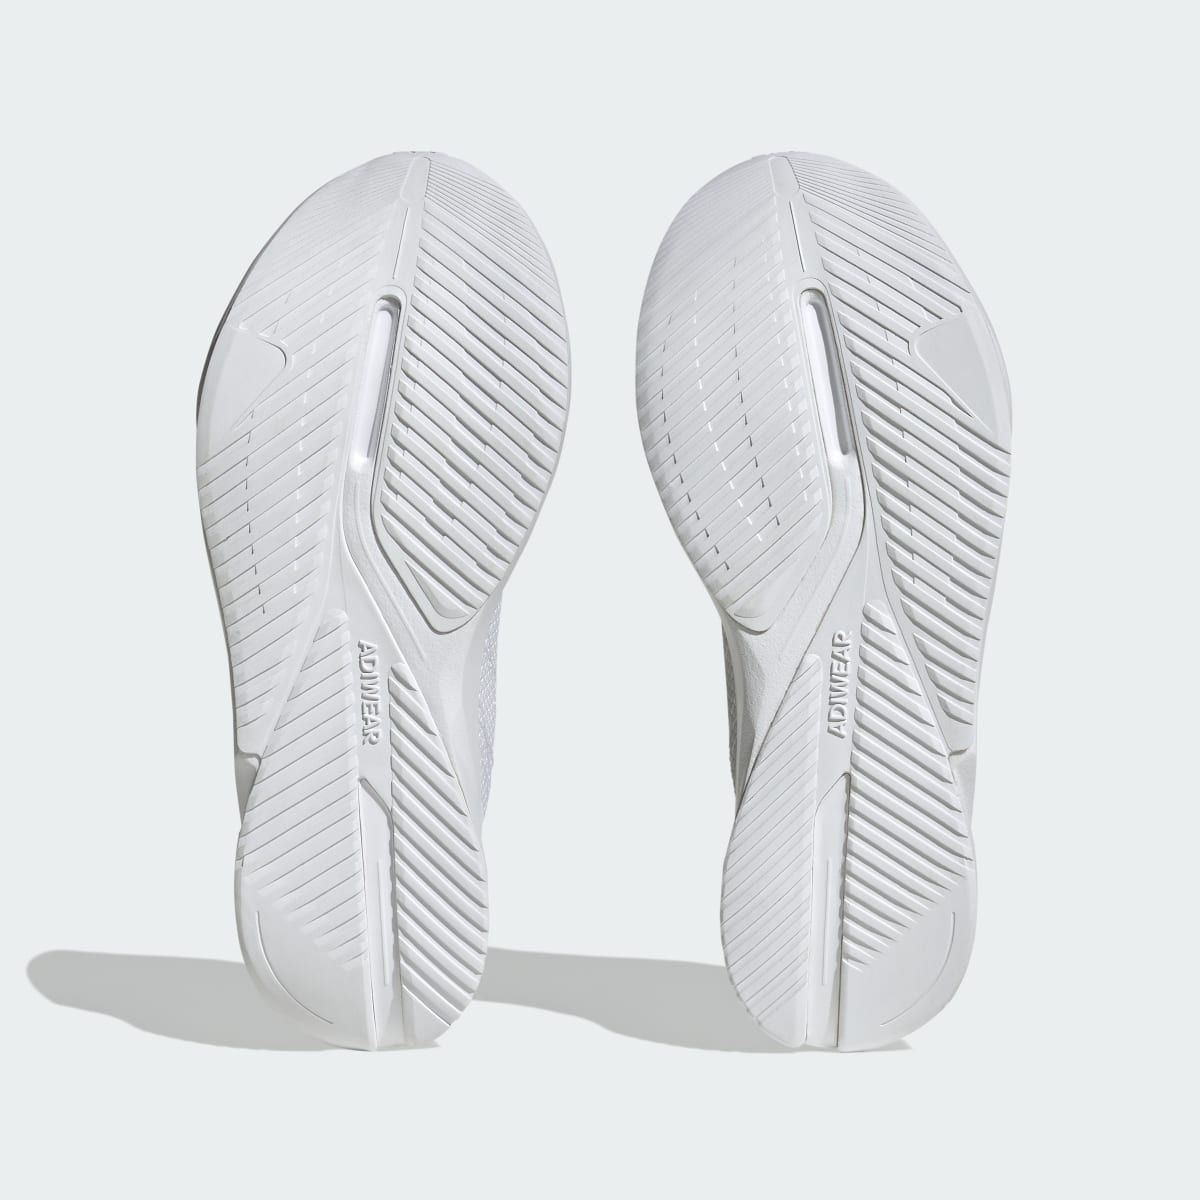 Adidas Duramo SL Shoes. 4